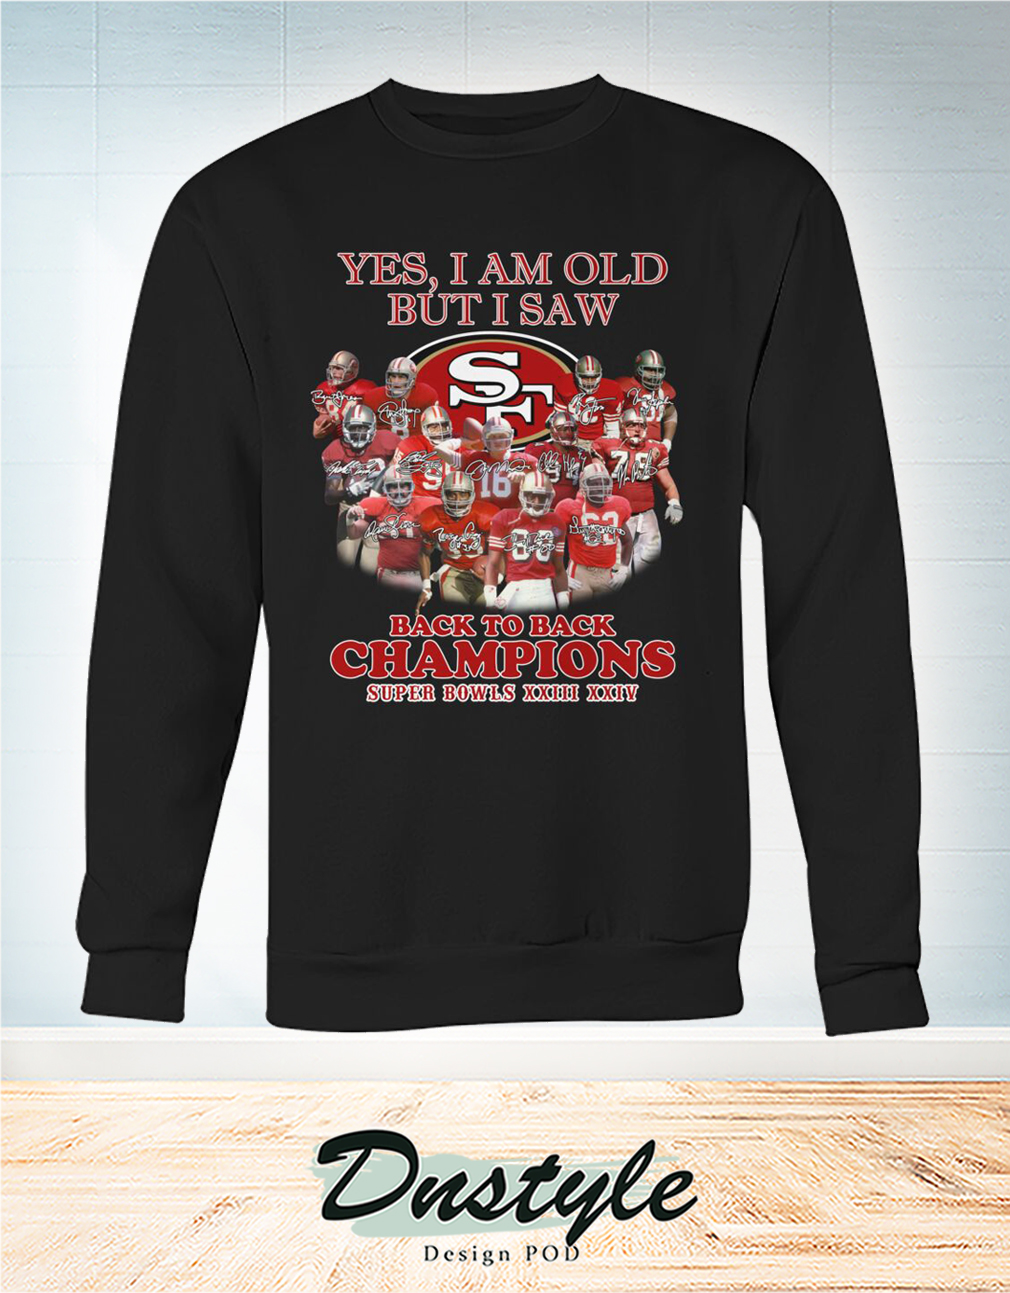 San Francisco 49ers yes I am old but I saw back to back champions sweatshirt